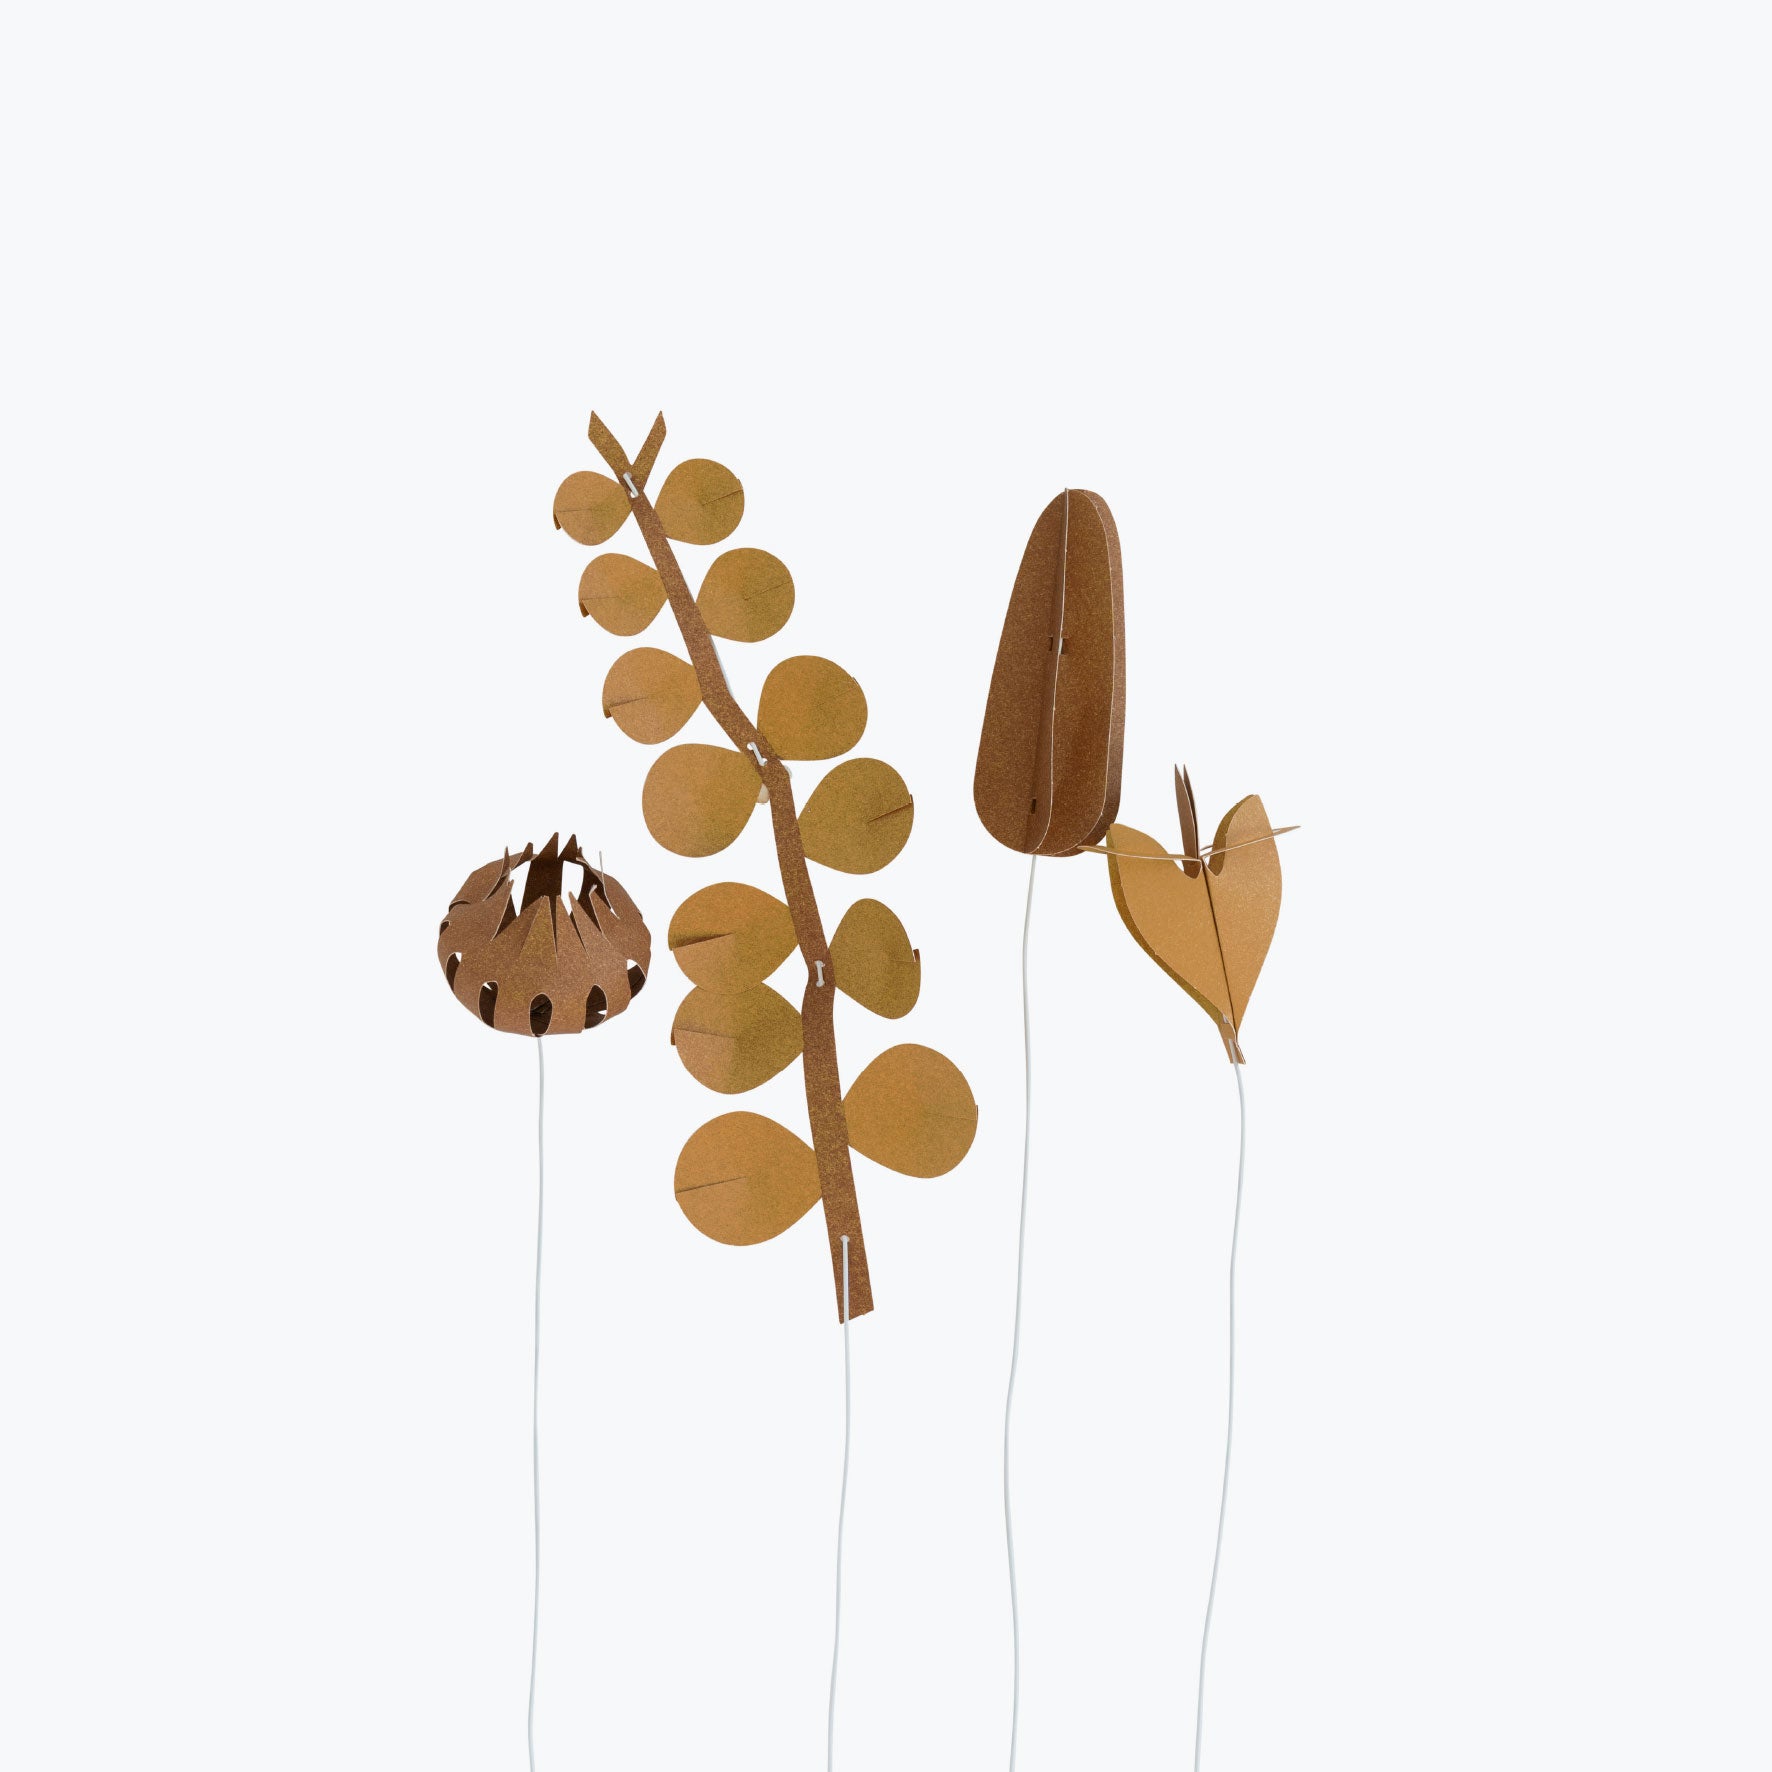 Jurianne Matter - Ornament - Flowers - Field - Small Browns